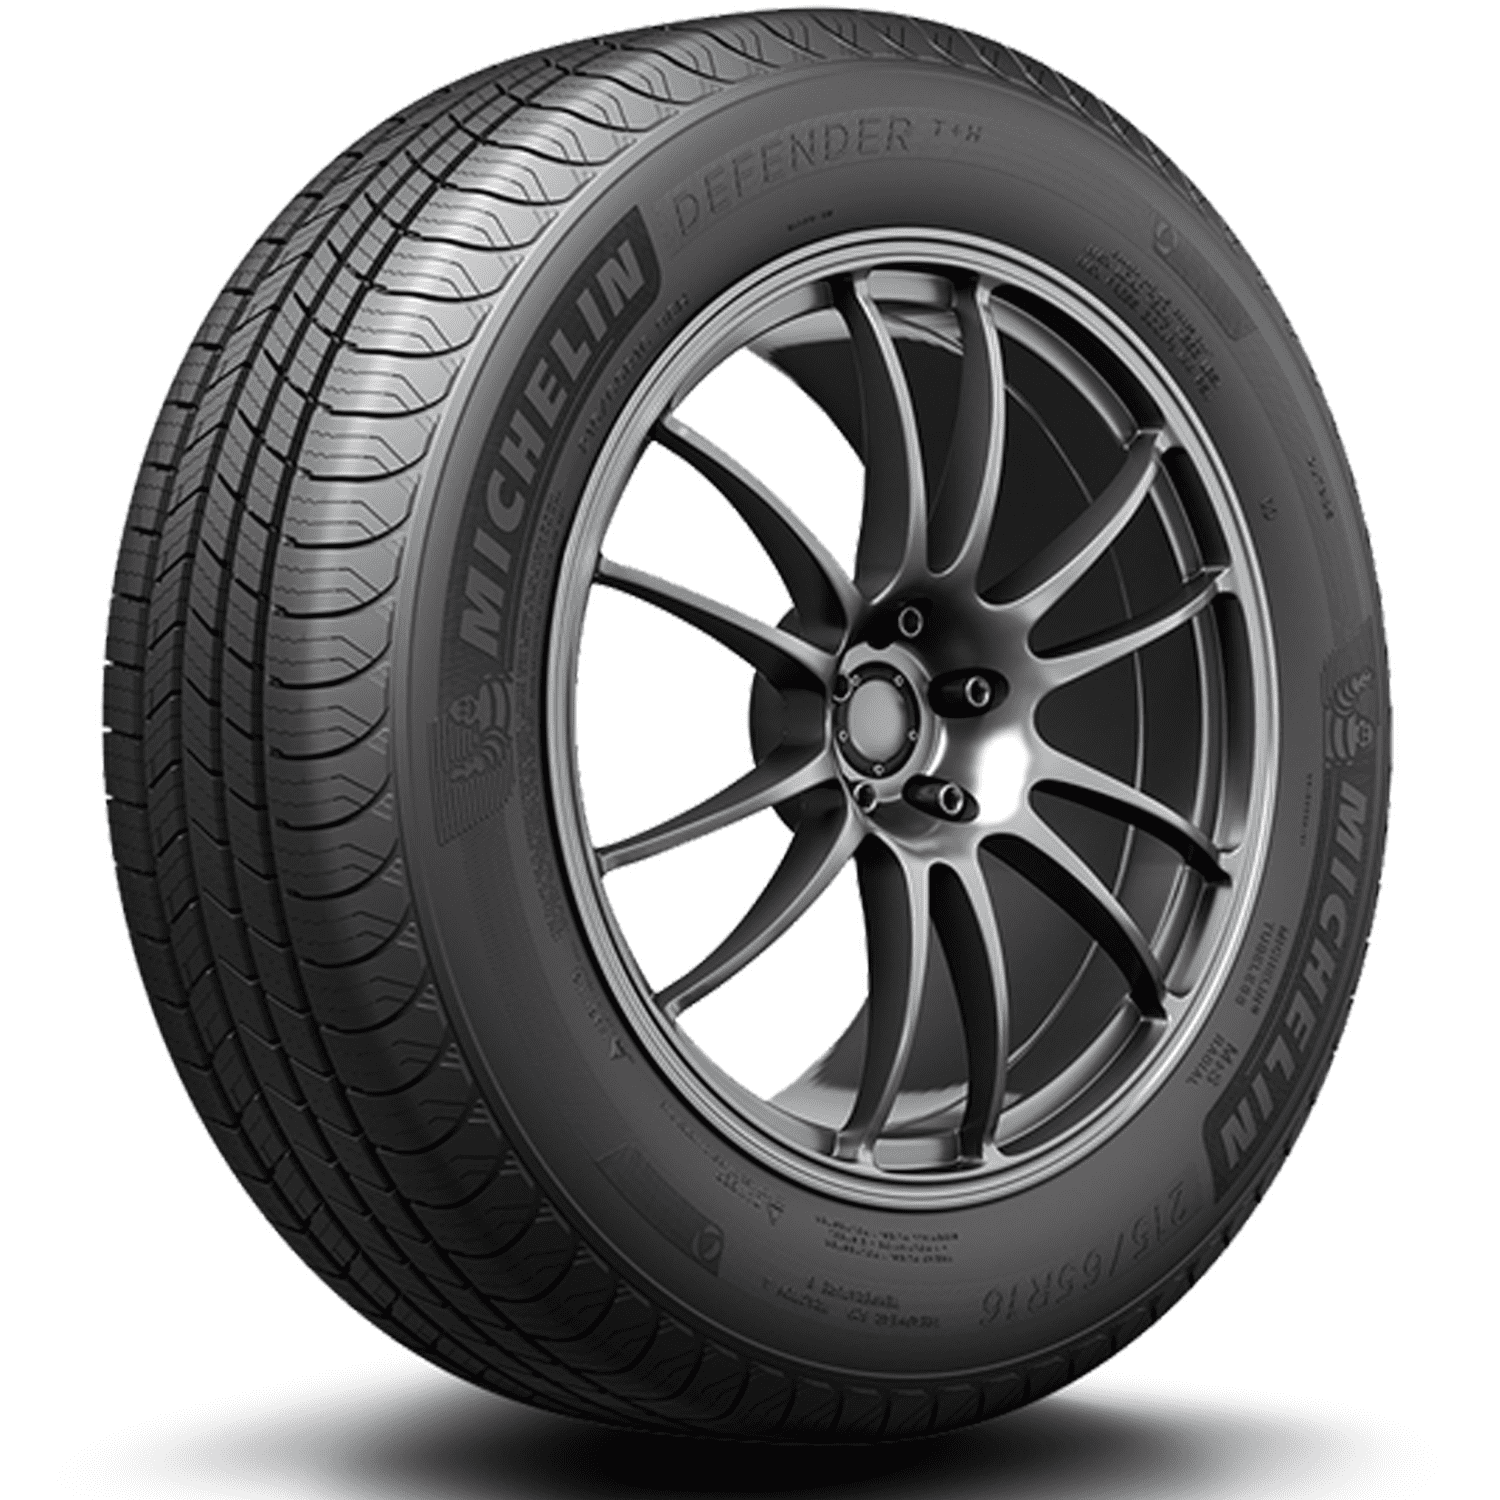 Michelin Defender T+H All Season 215/60R16 95H Passenger Tire